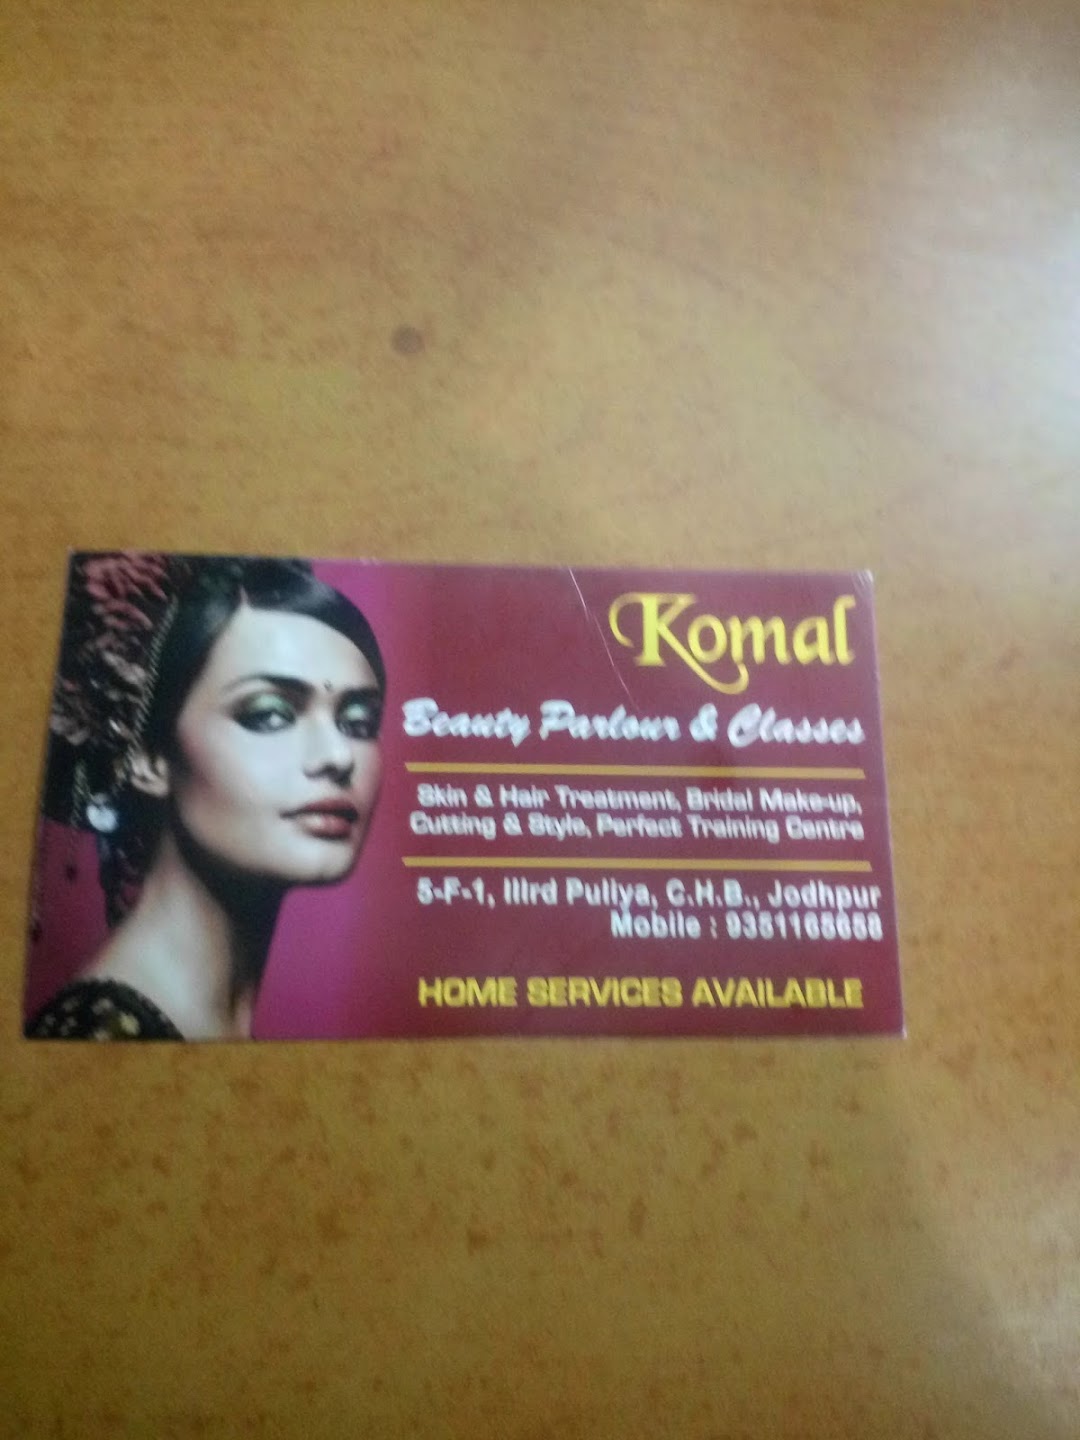 Komal beauty parlor